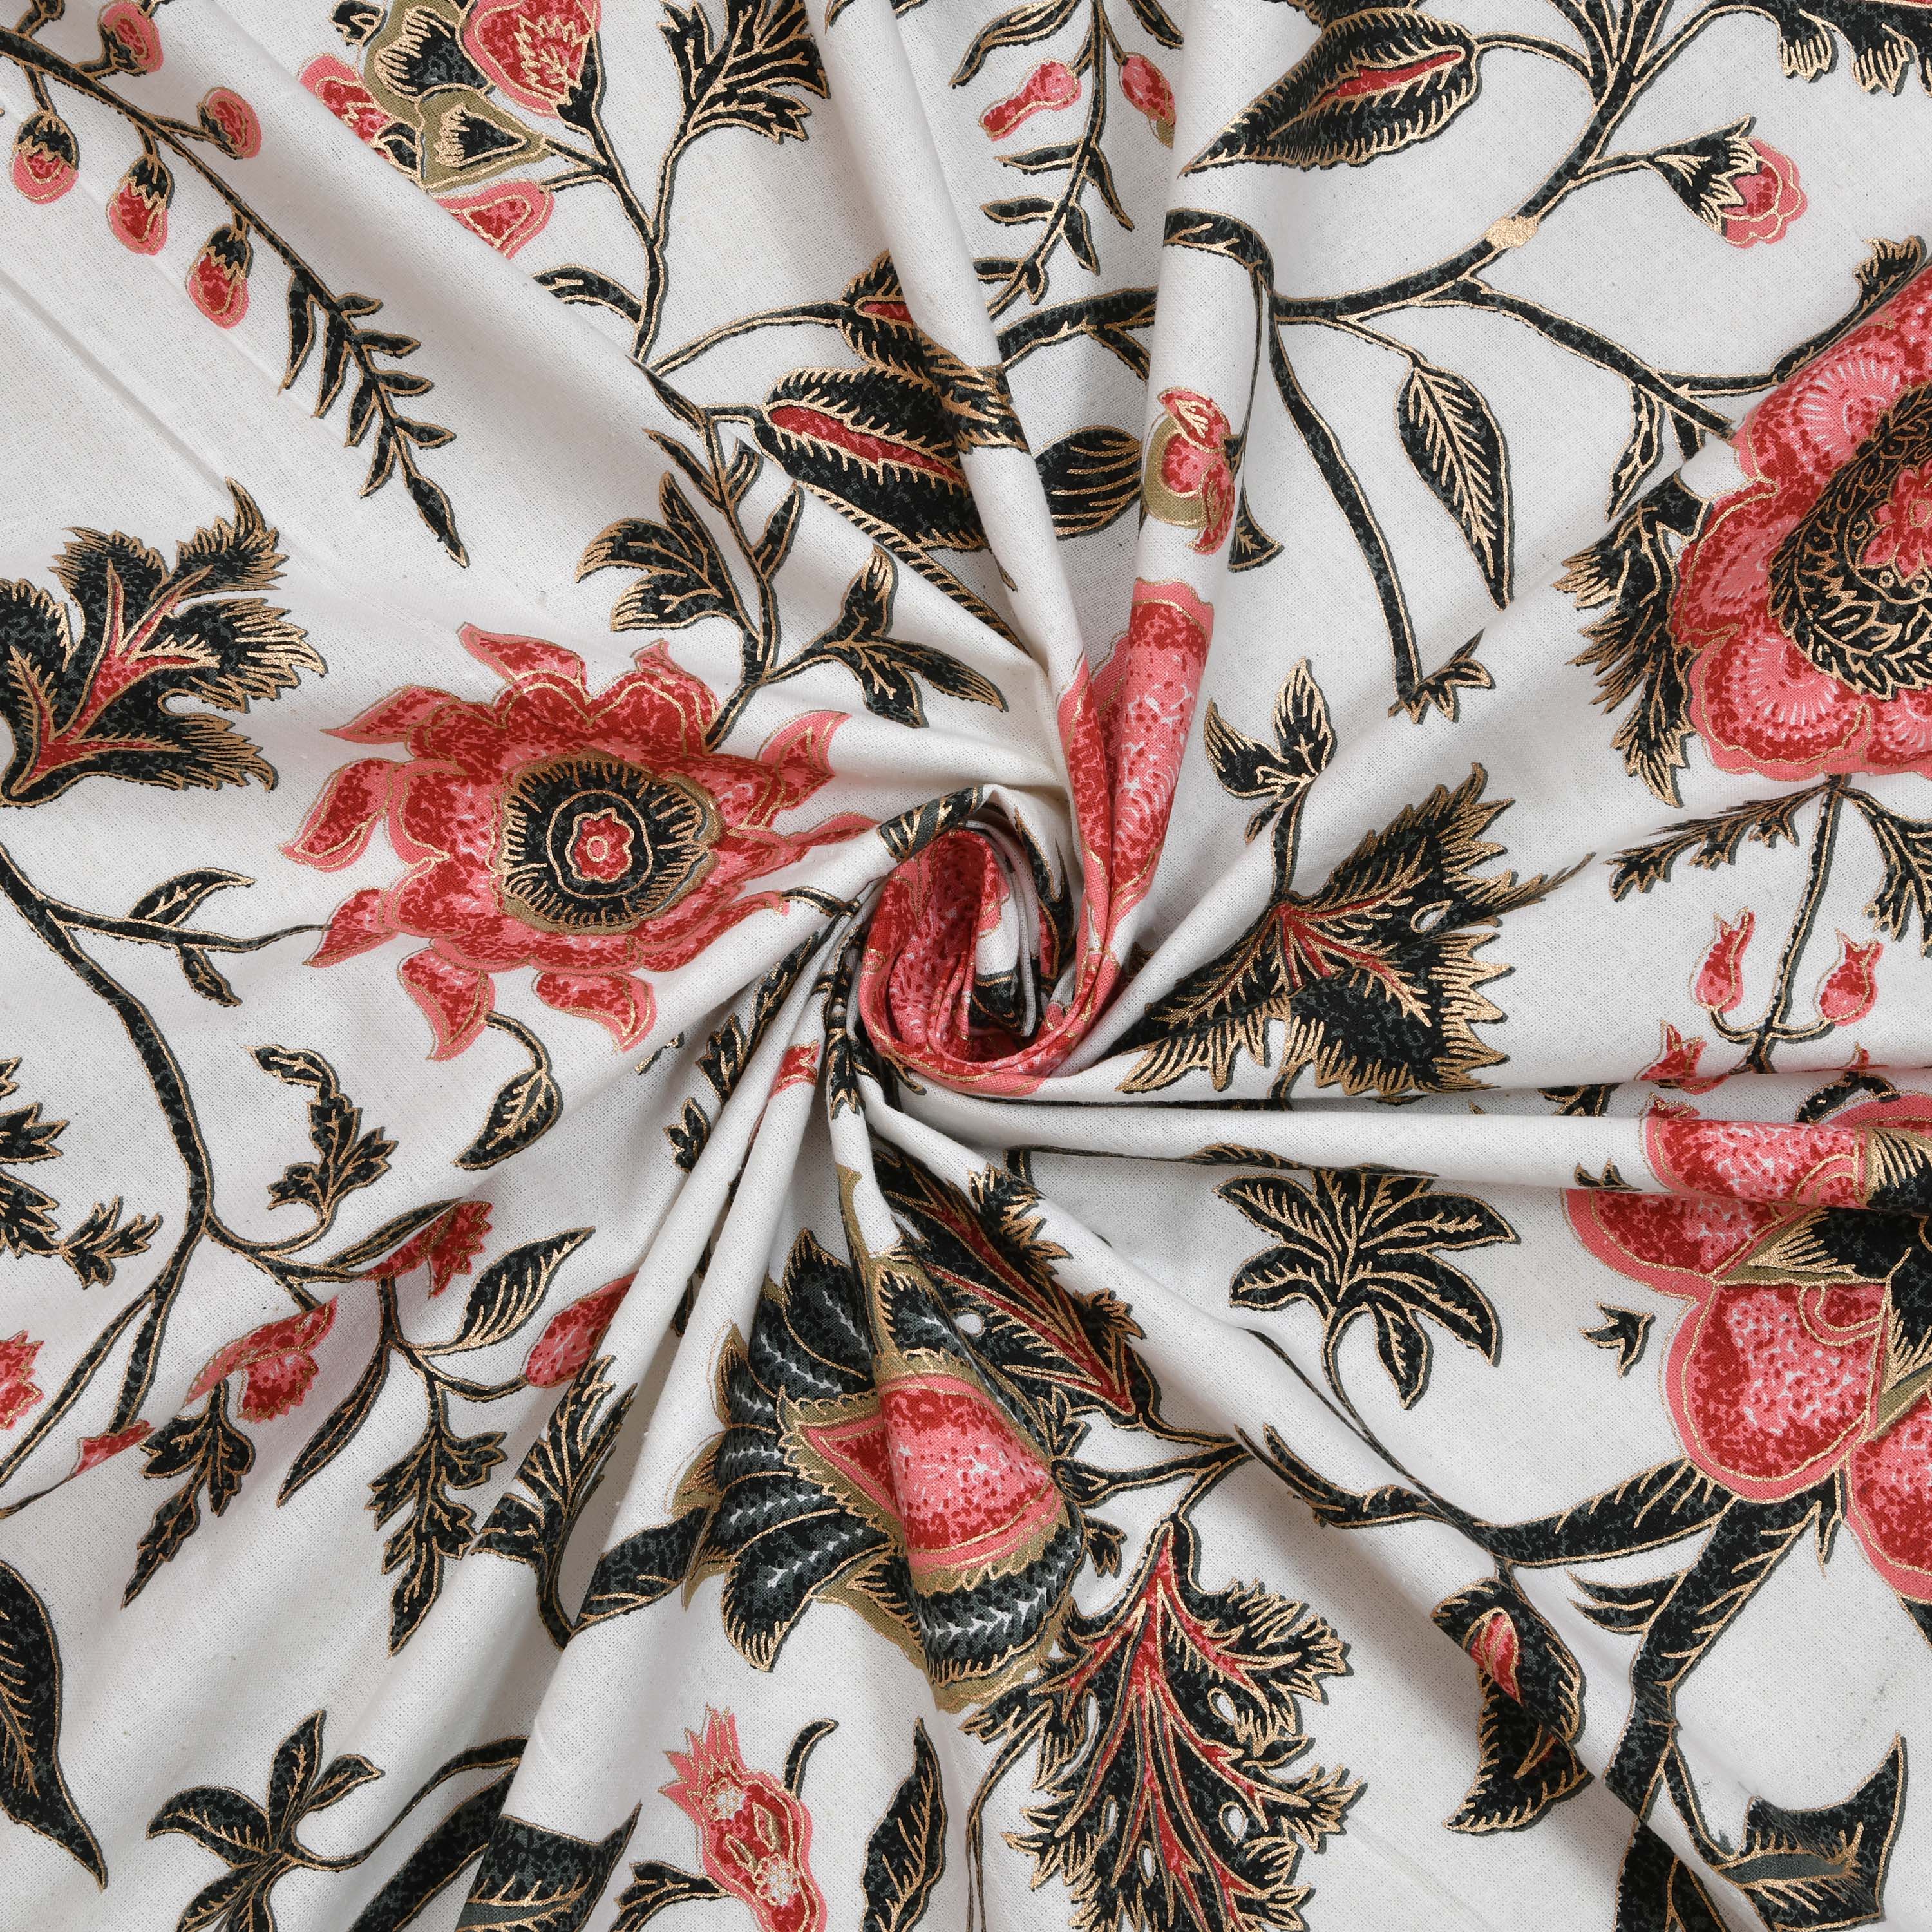 Ethnic Prints Bedsheet- Double Bed -Golden Red Flora